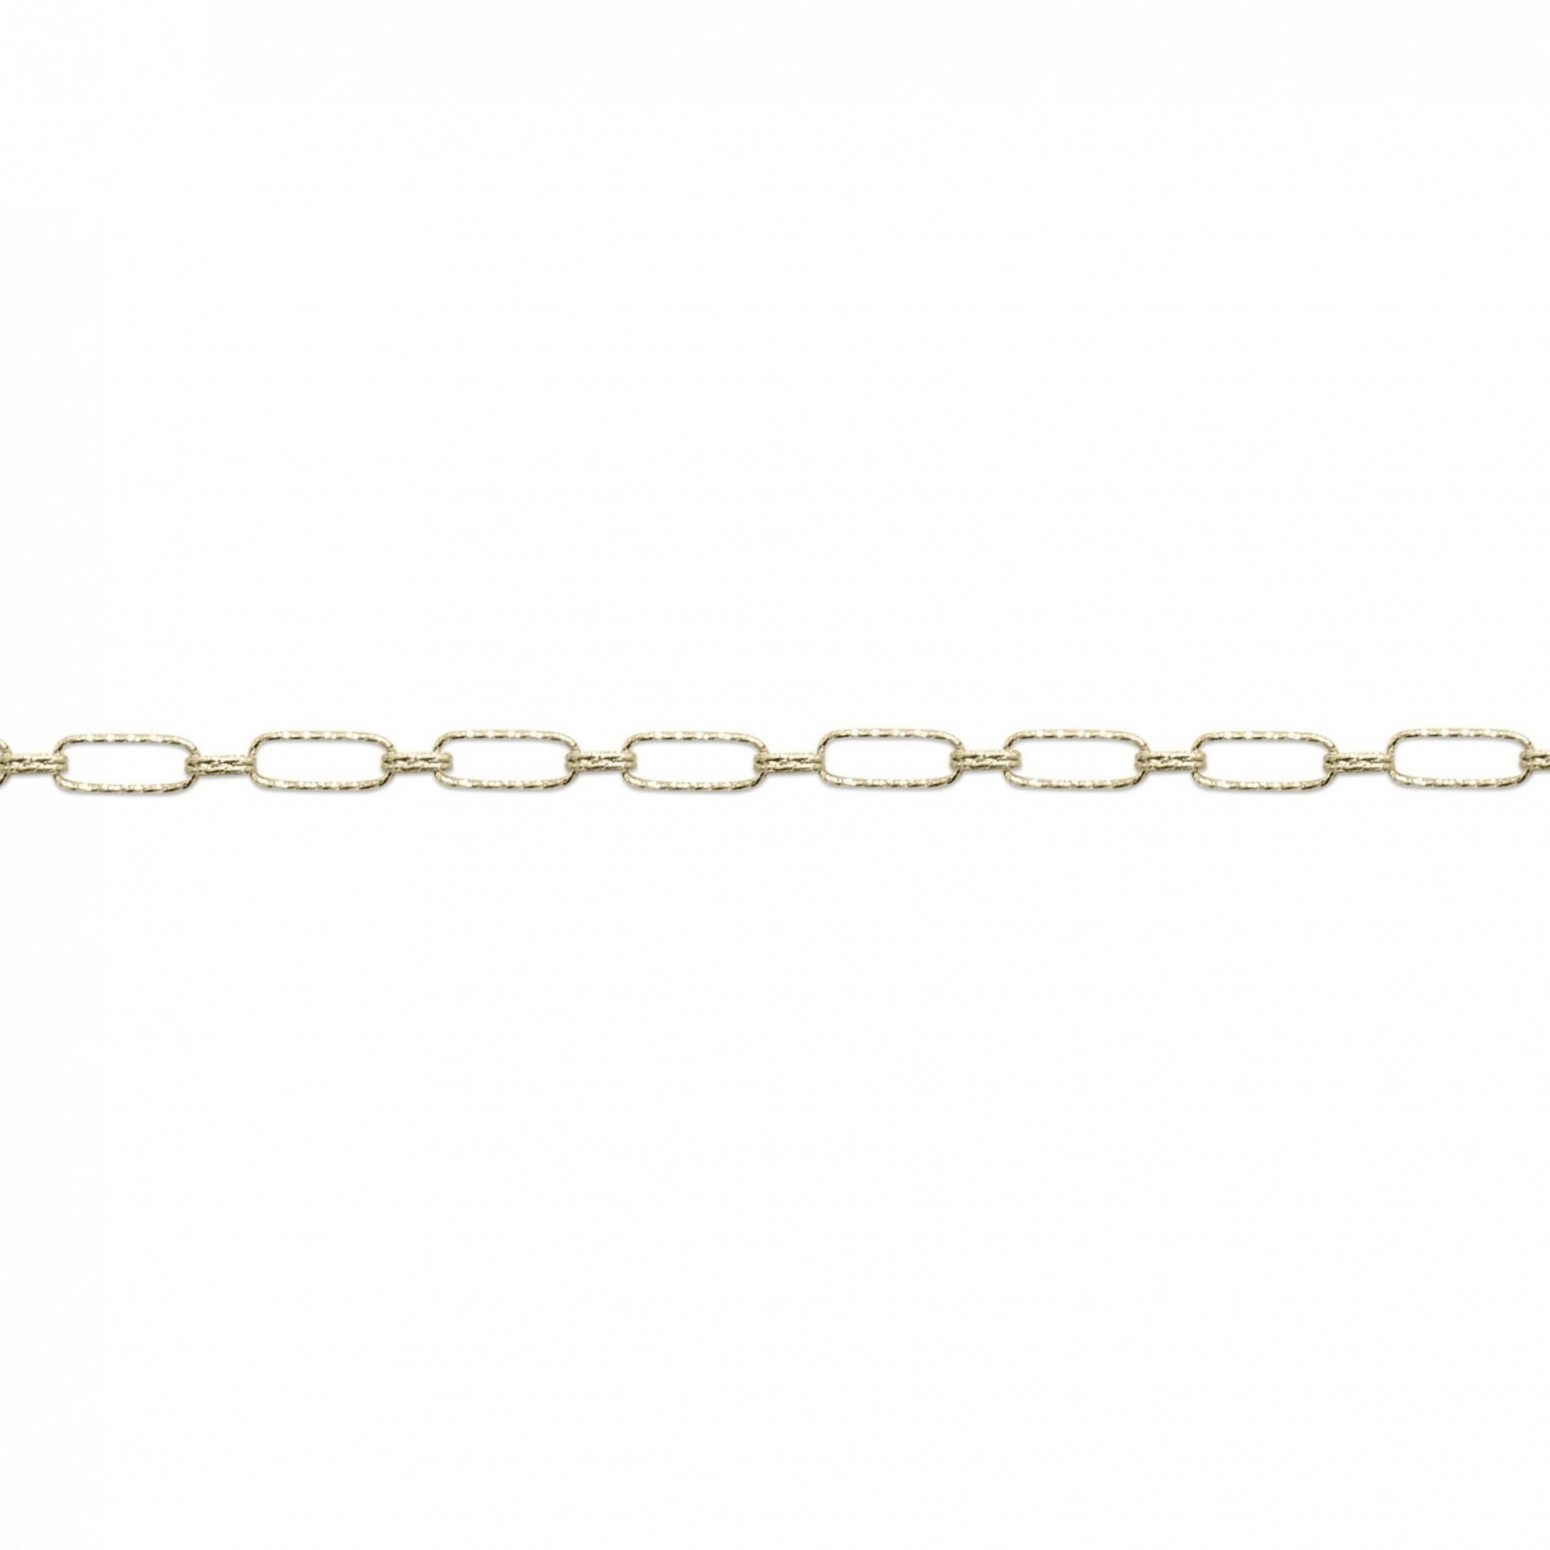 Bracelet Κ14 gold, br2938 BRACELETS Κοσμηματα - chrilia.gr